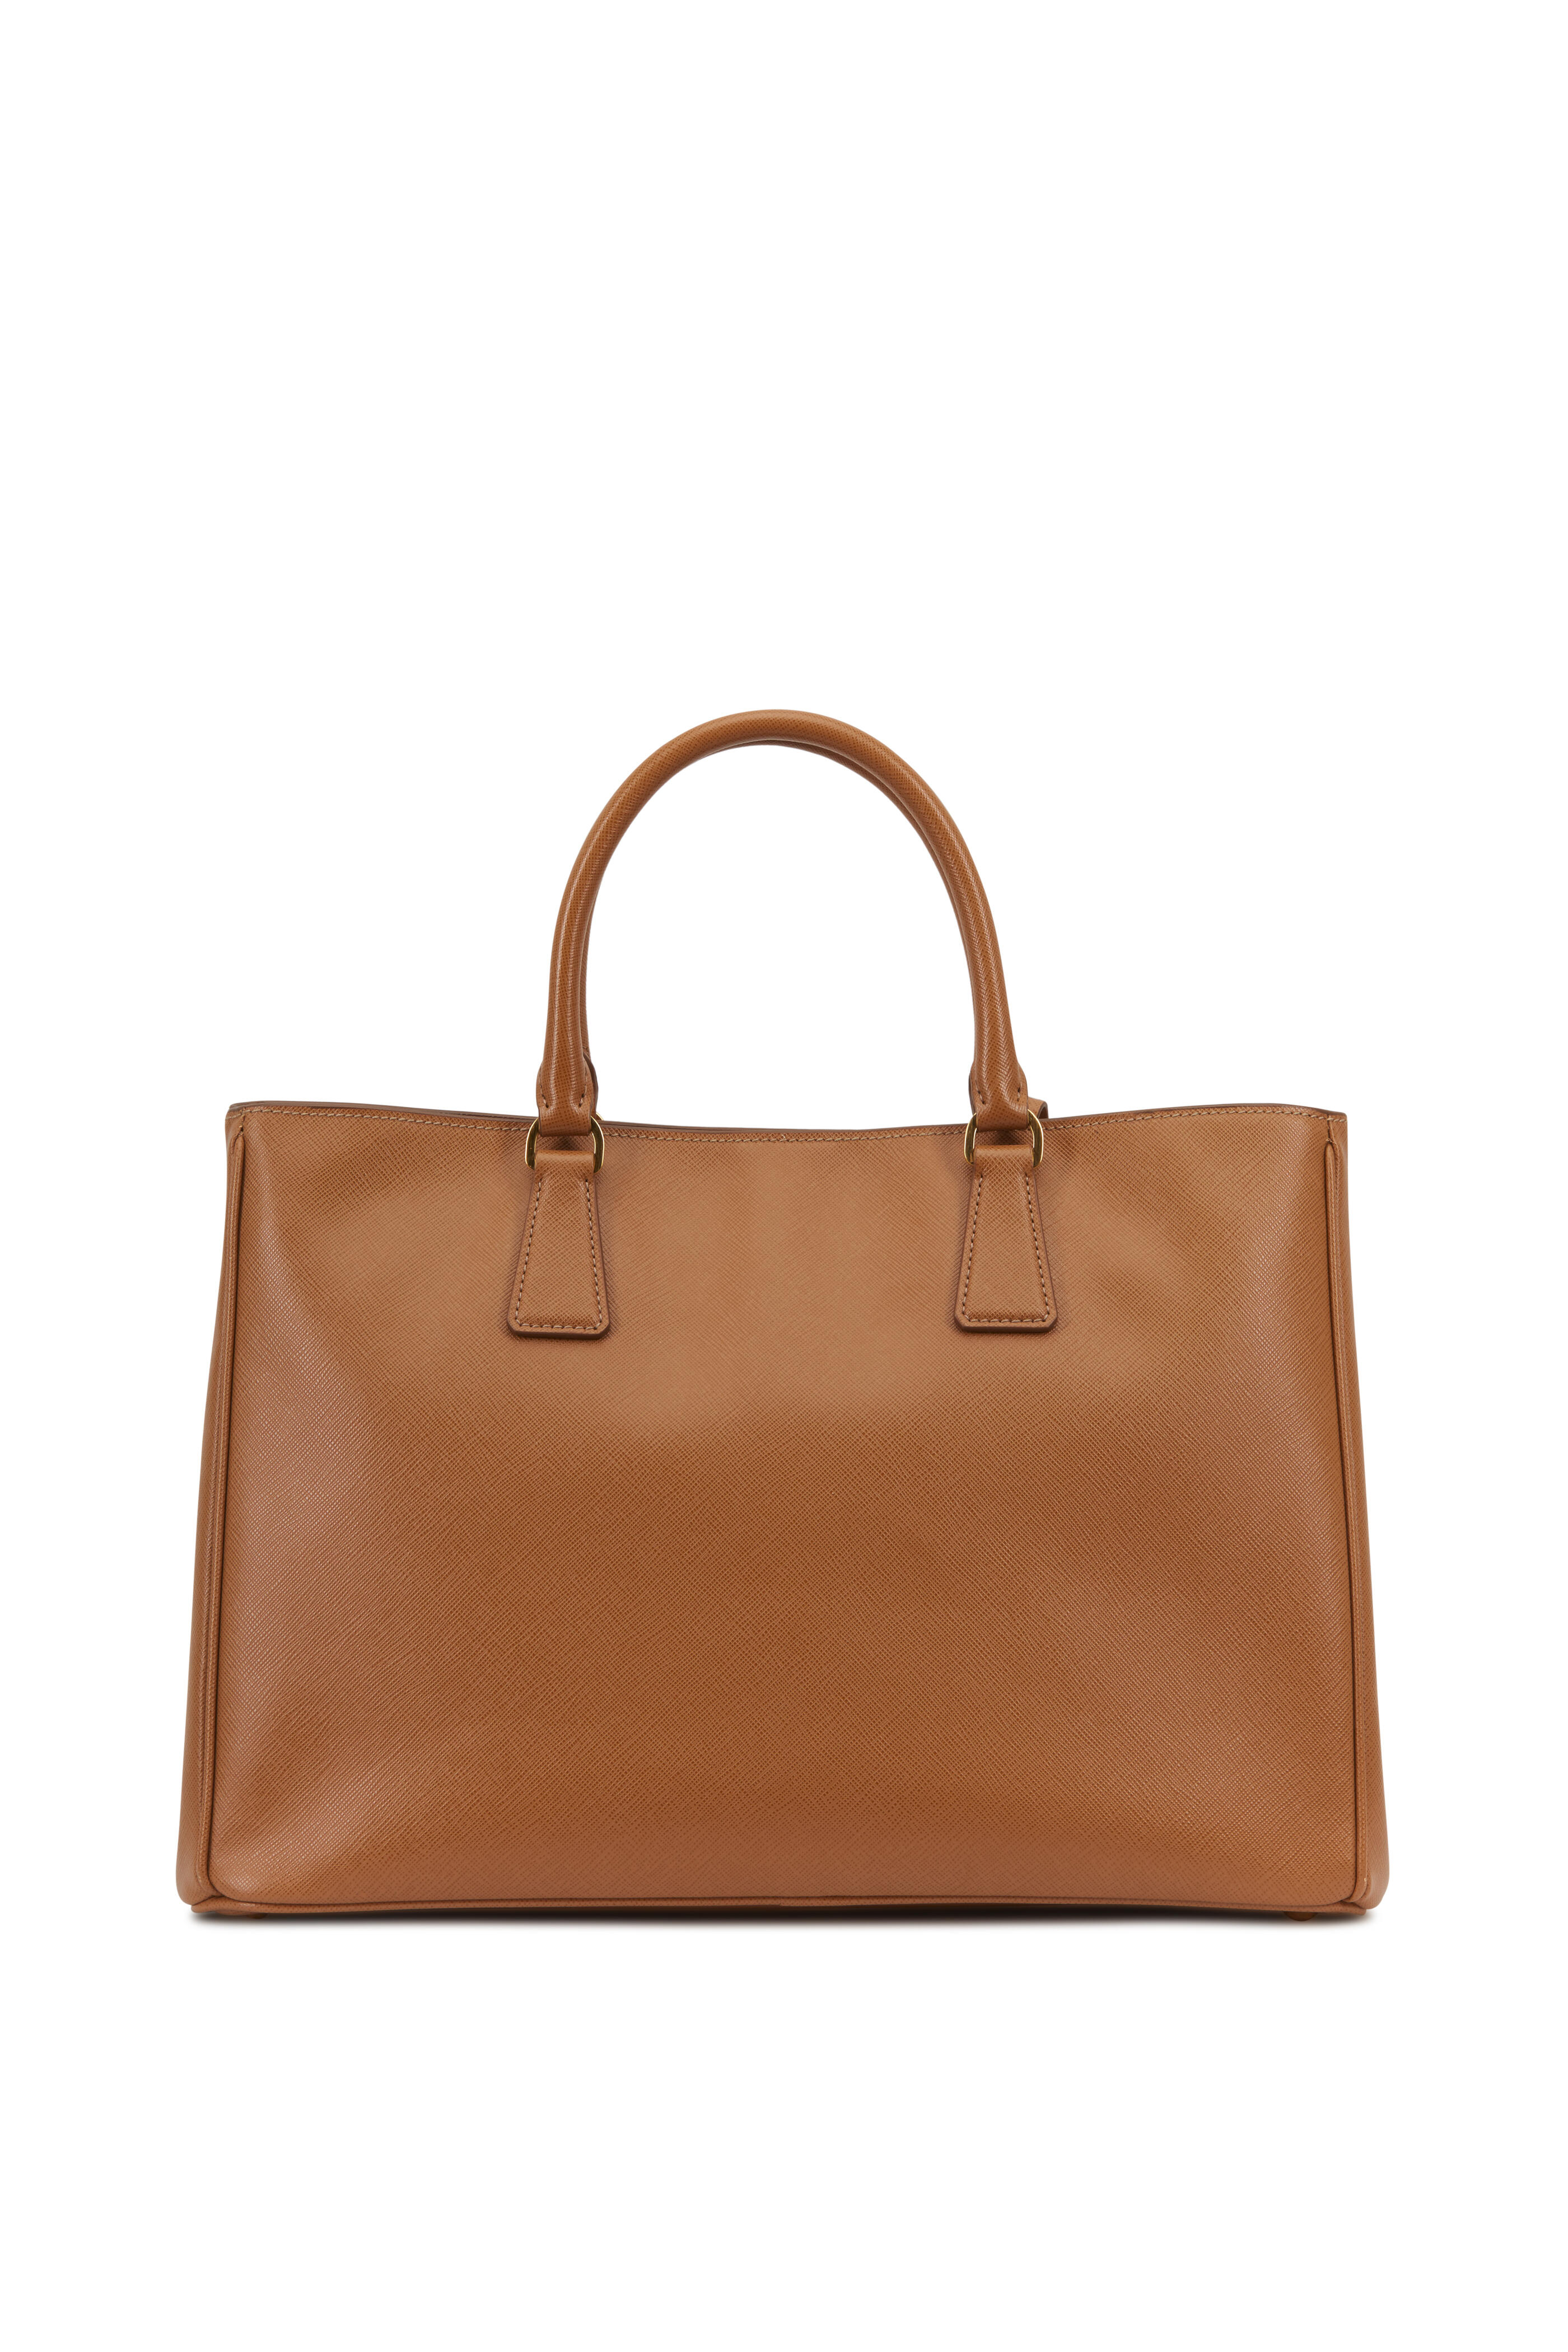 Prada Galleria Orange Saffiano Leather Tote Bag